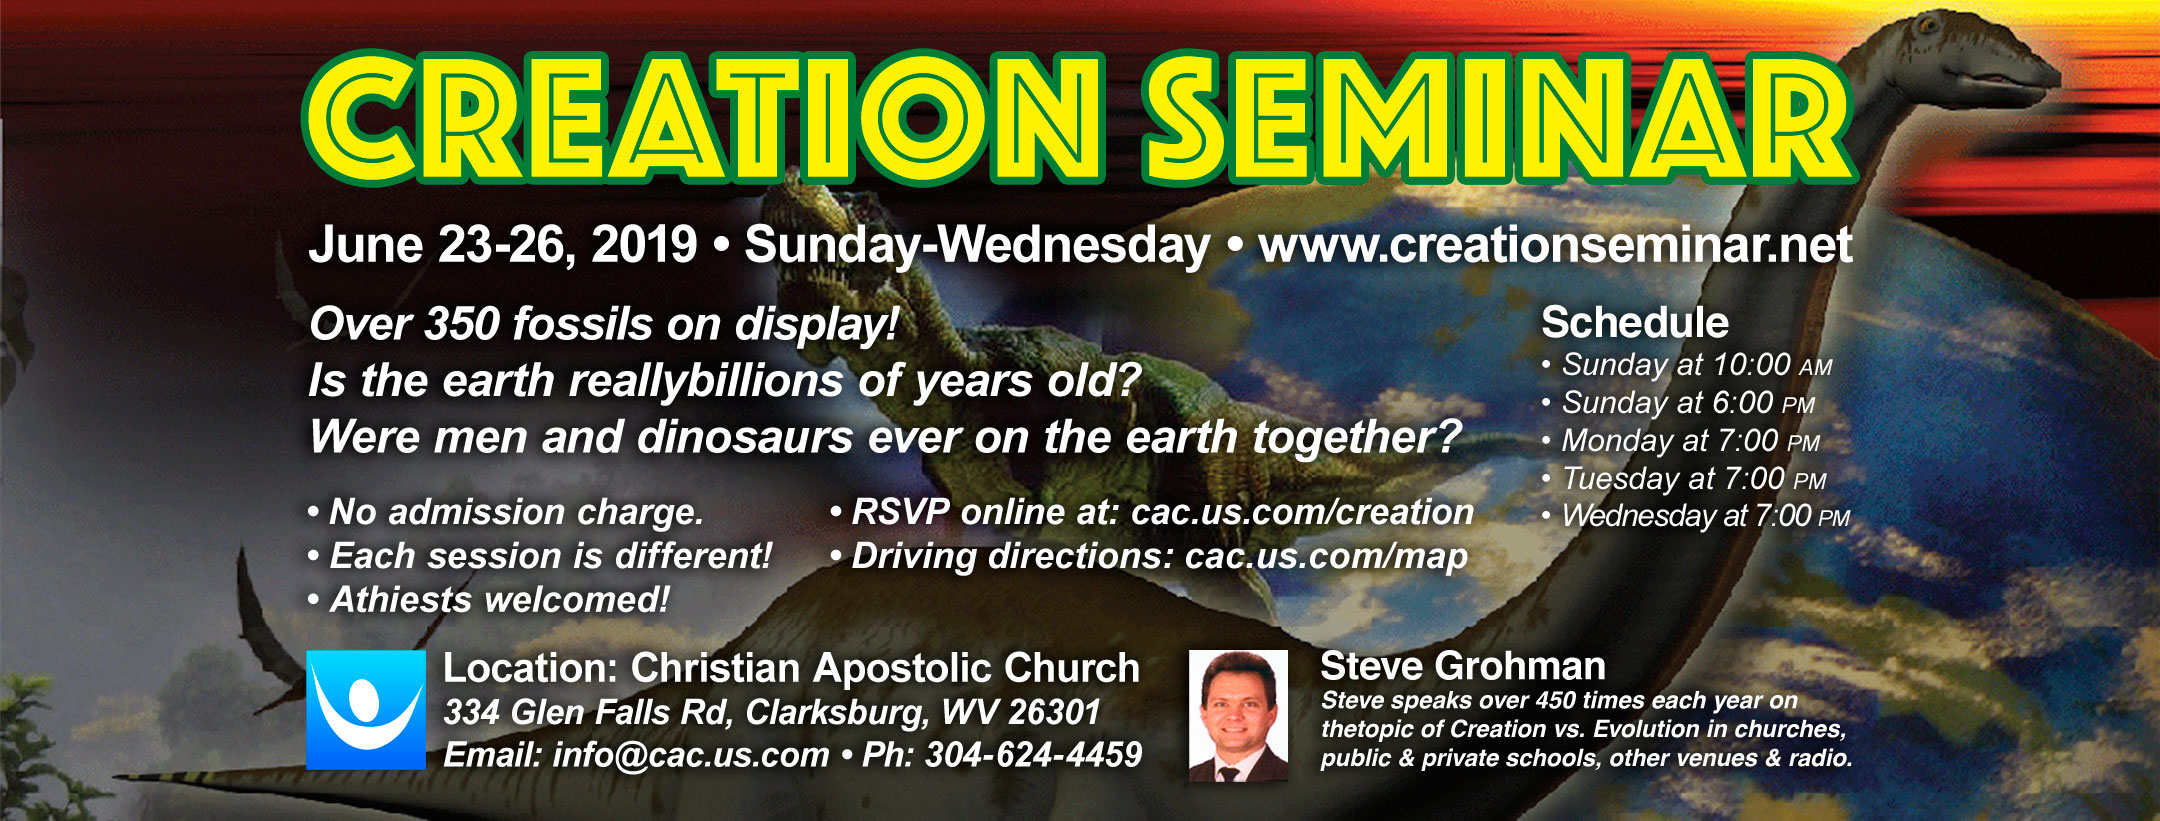 Creation Seminar at Christian Apostolic Church